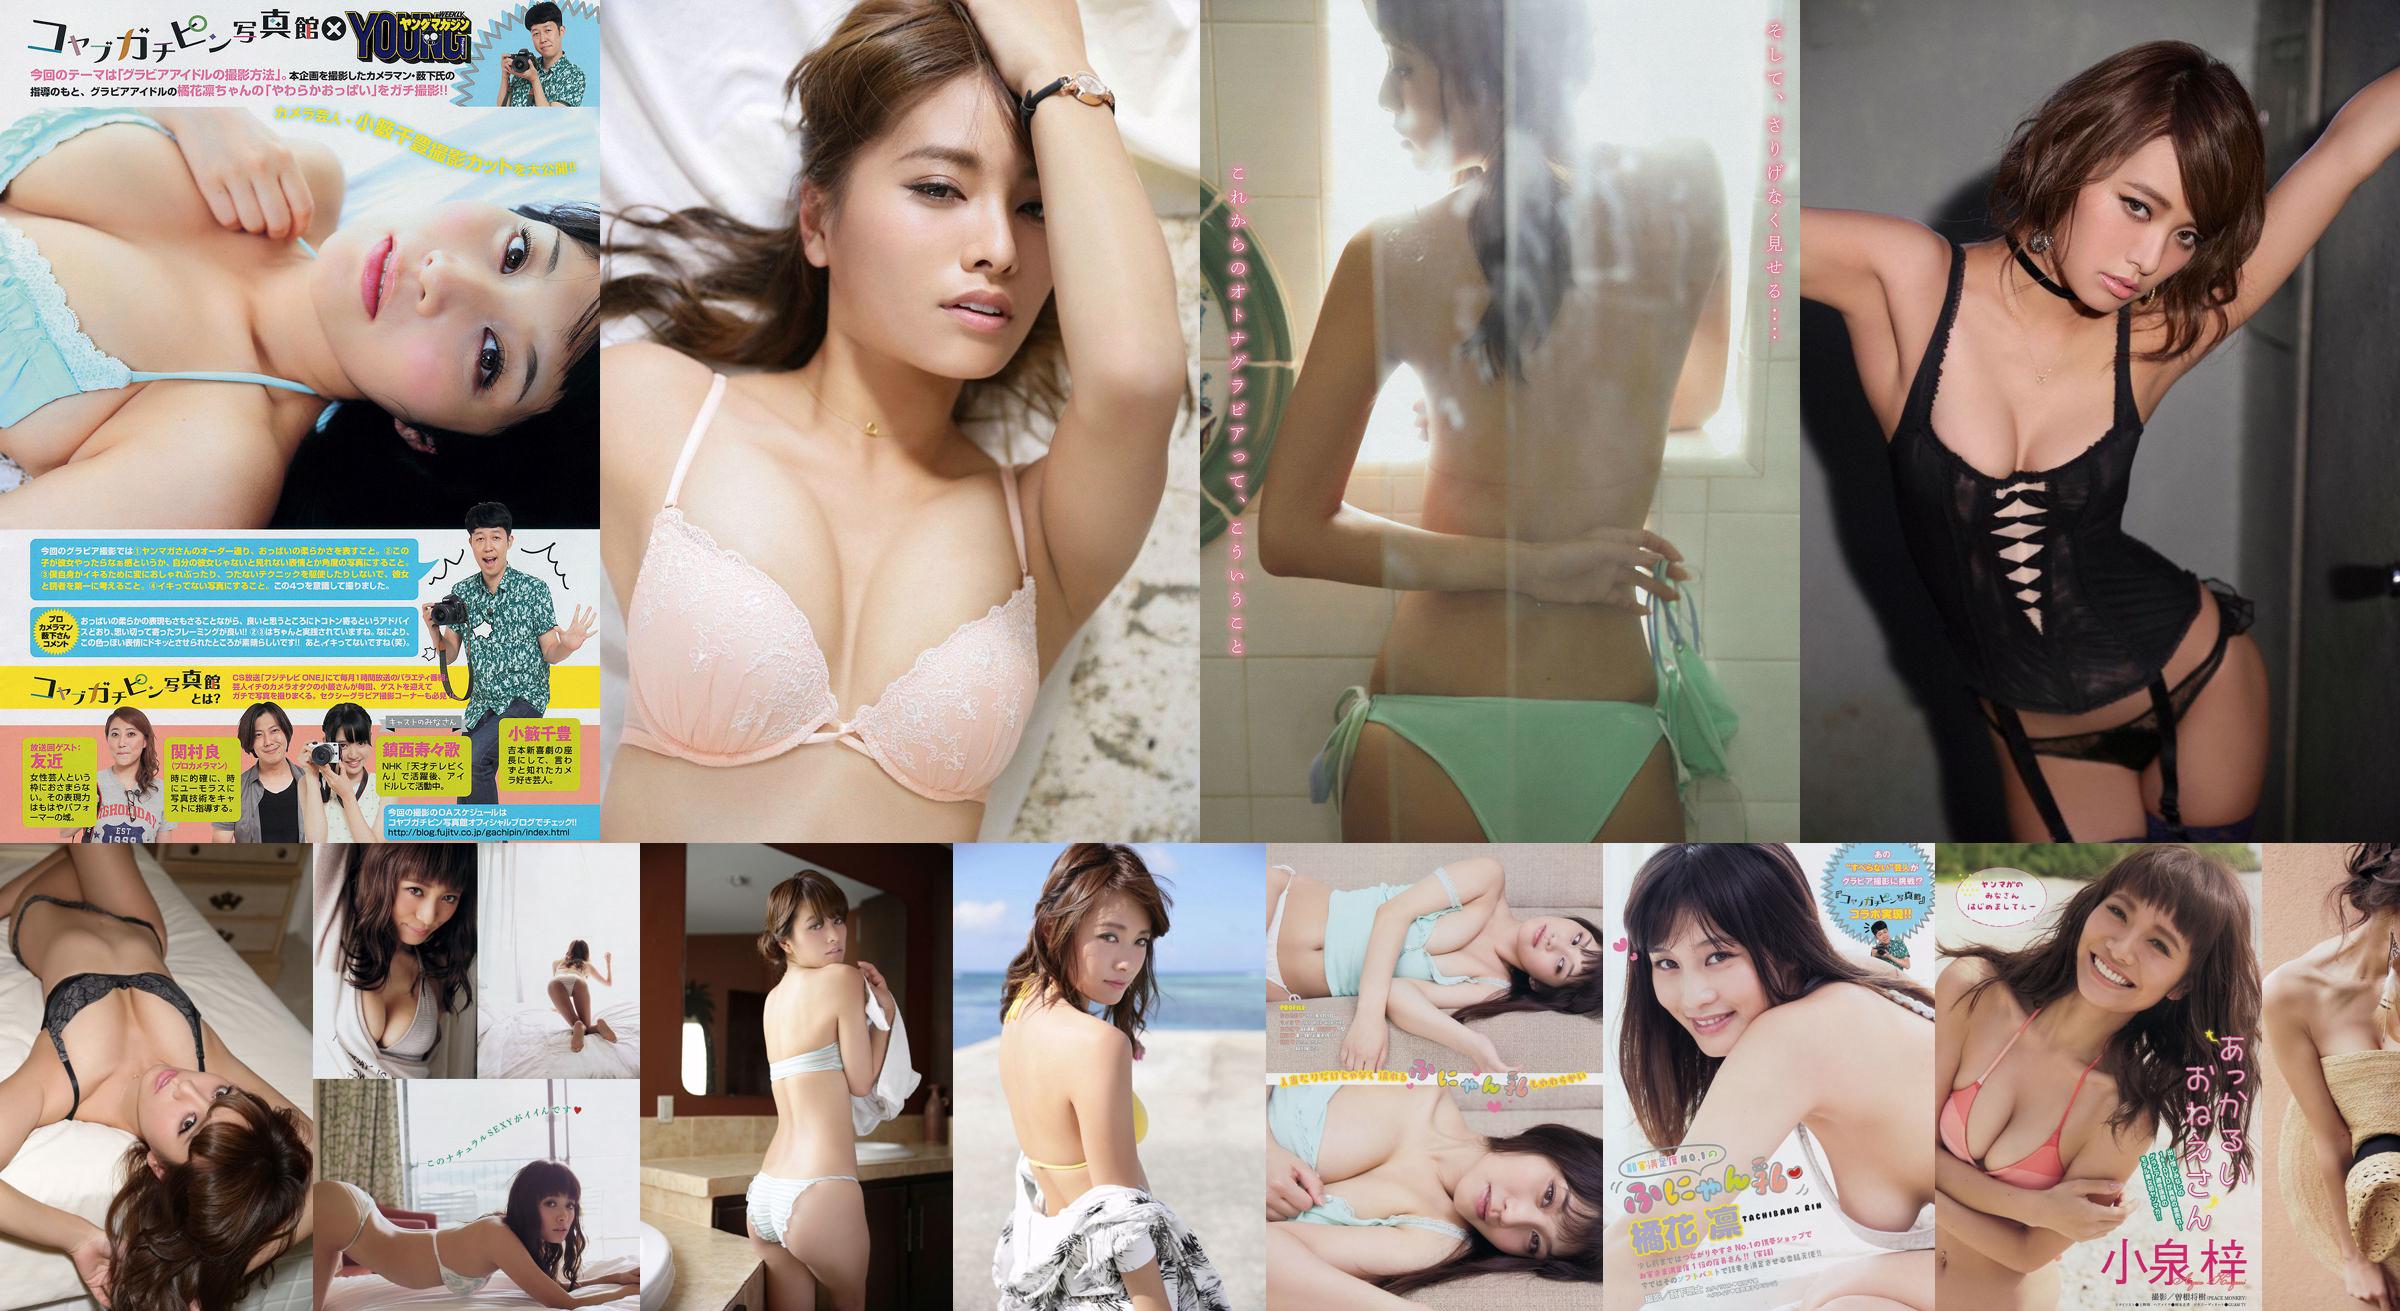 [Majalah Muda] Azusa Koizumi Tachibana Rin 2014 Majalah Foto No.43 No.baeb58 Halaman 1